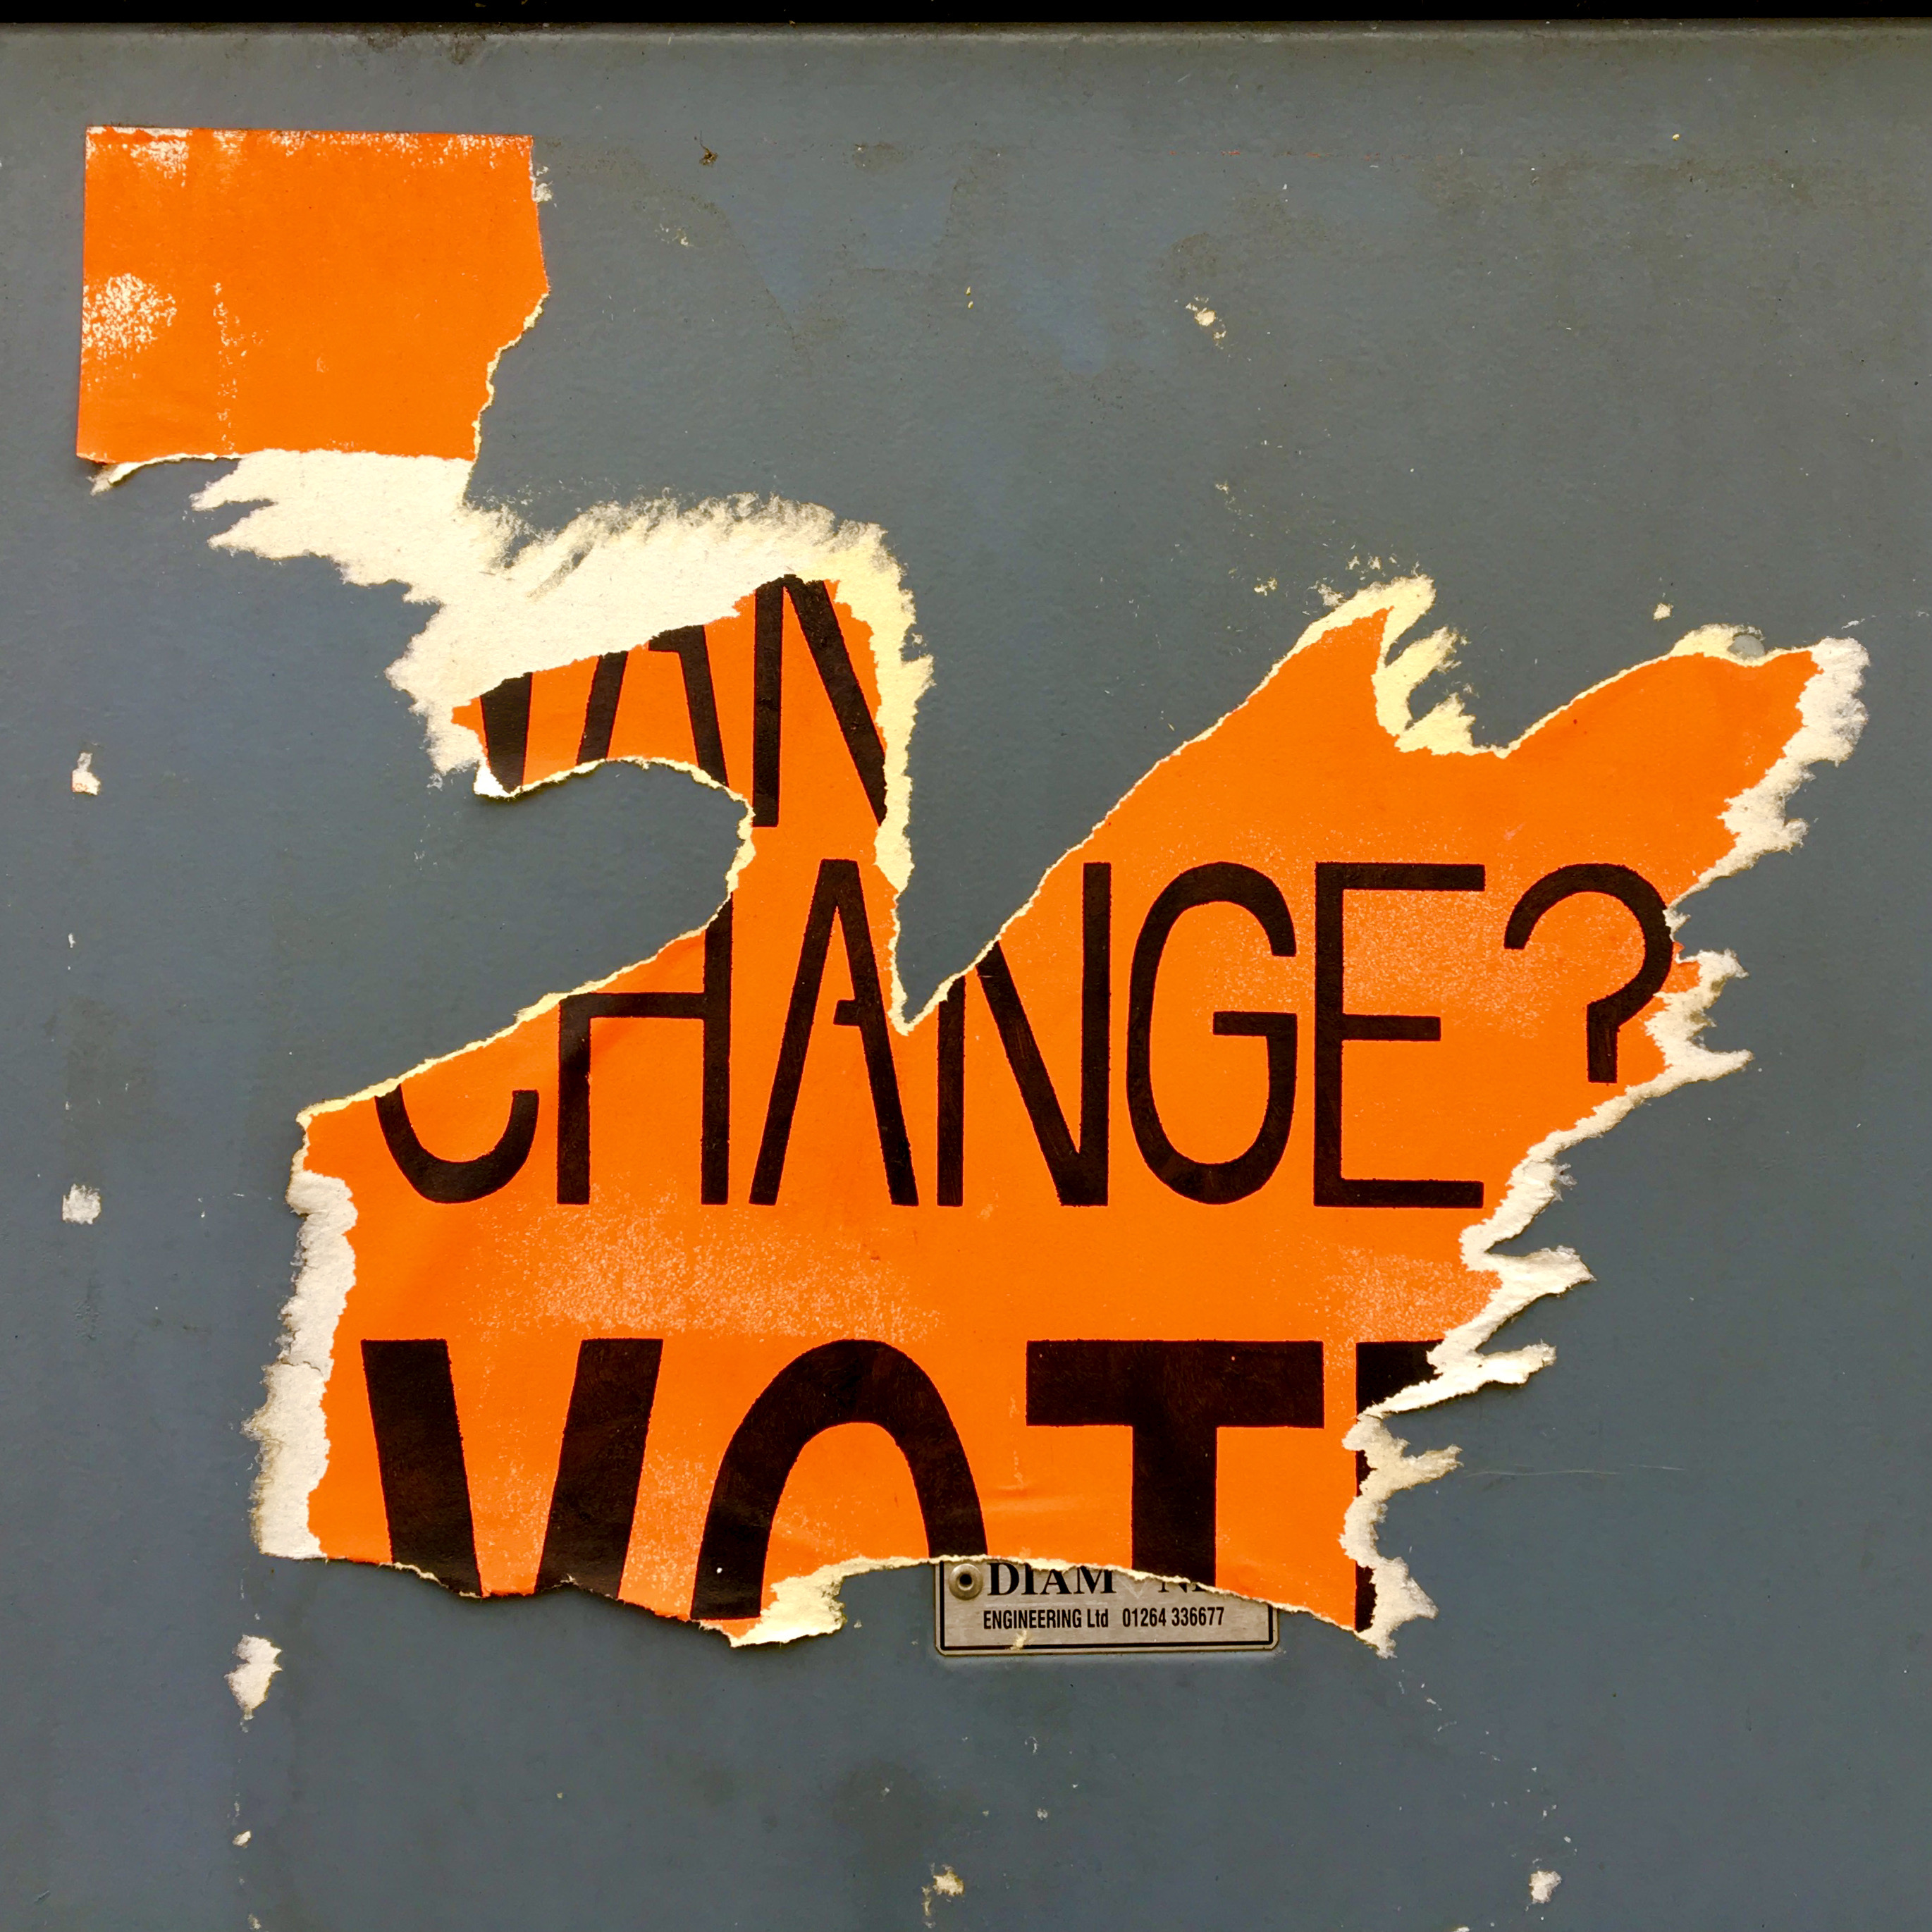 Change Poster